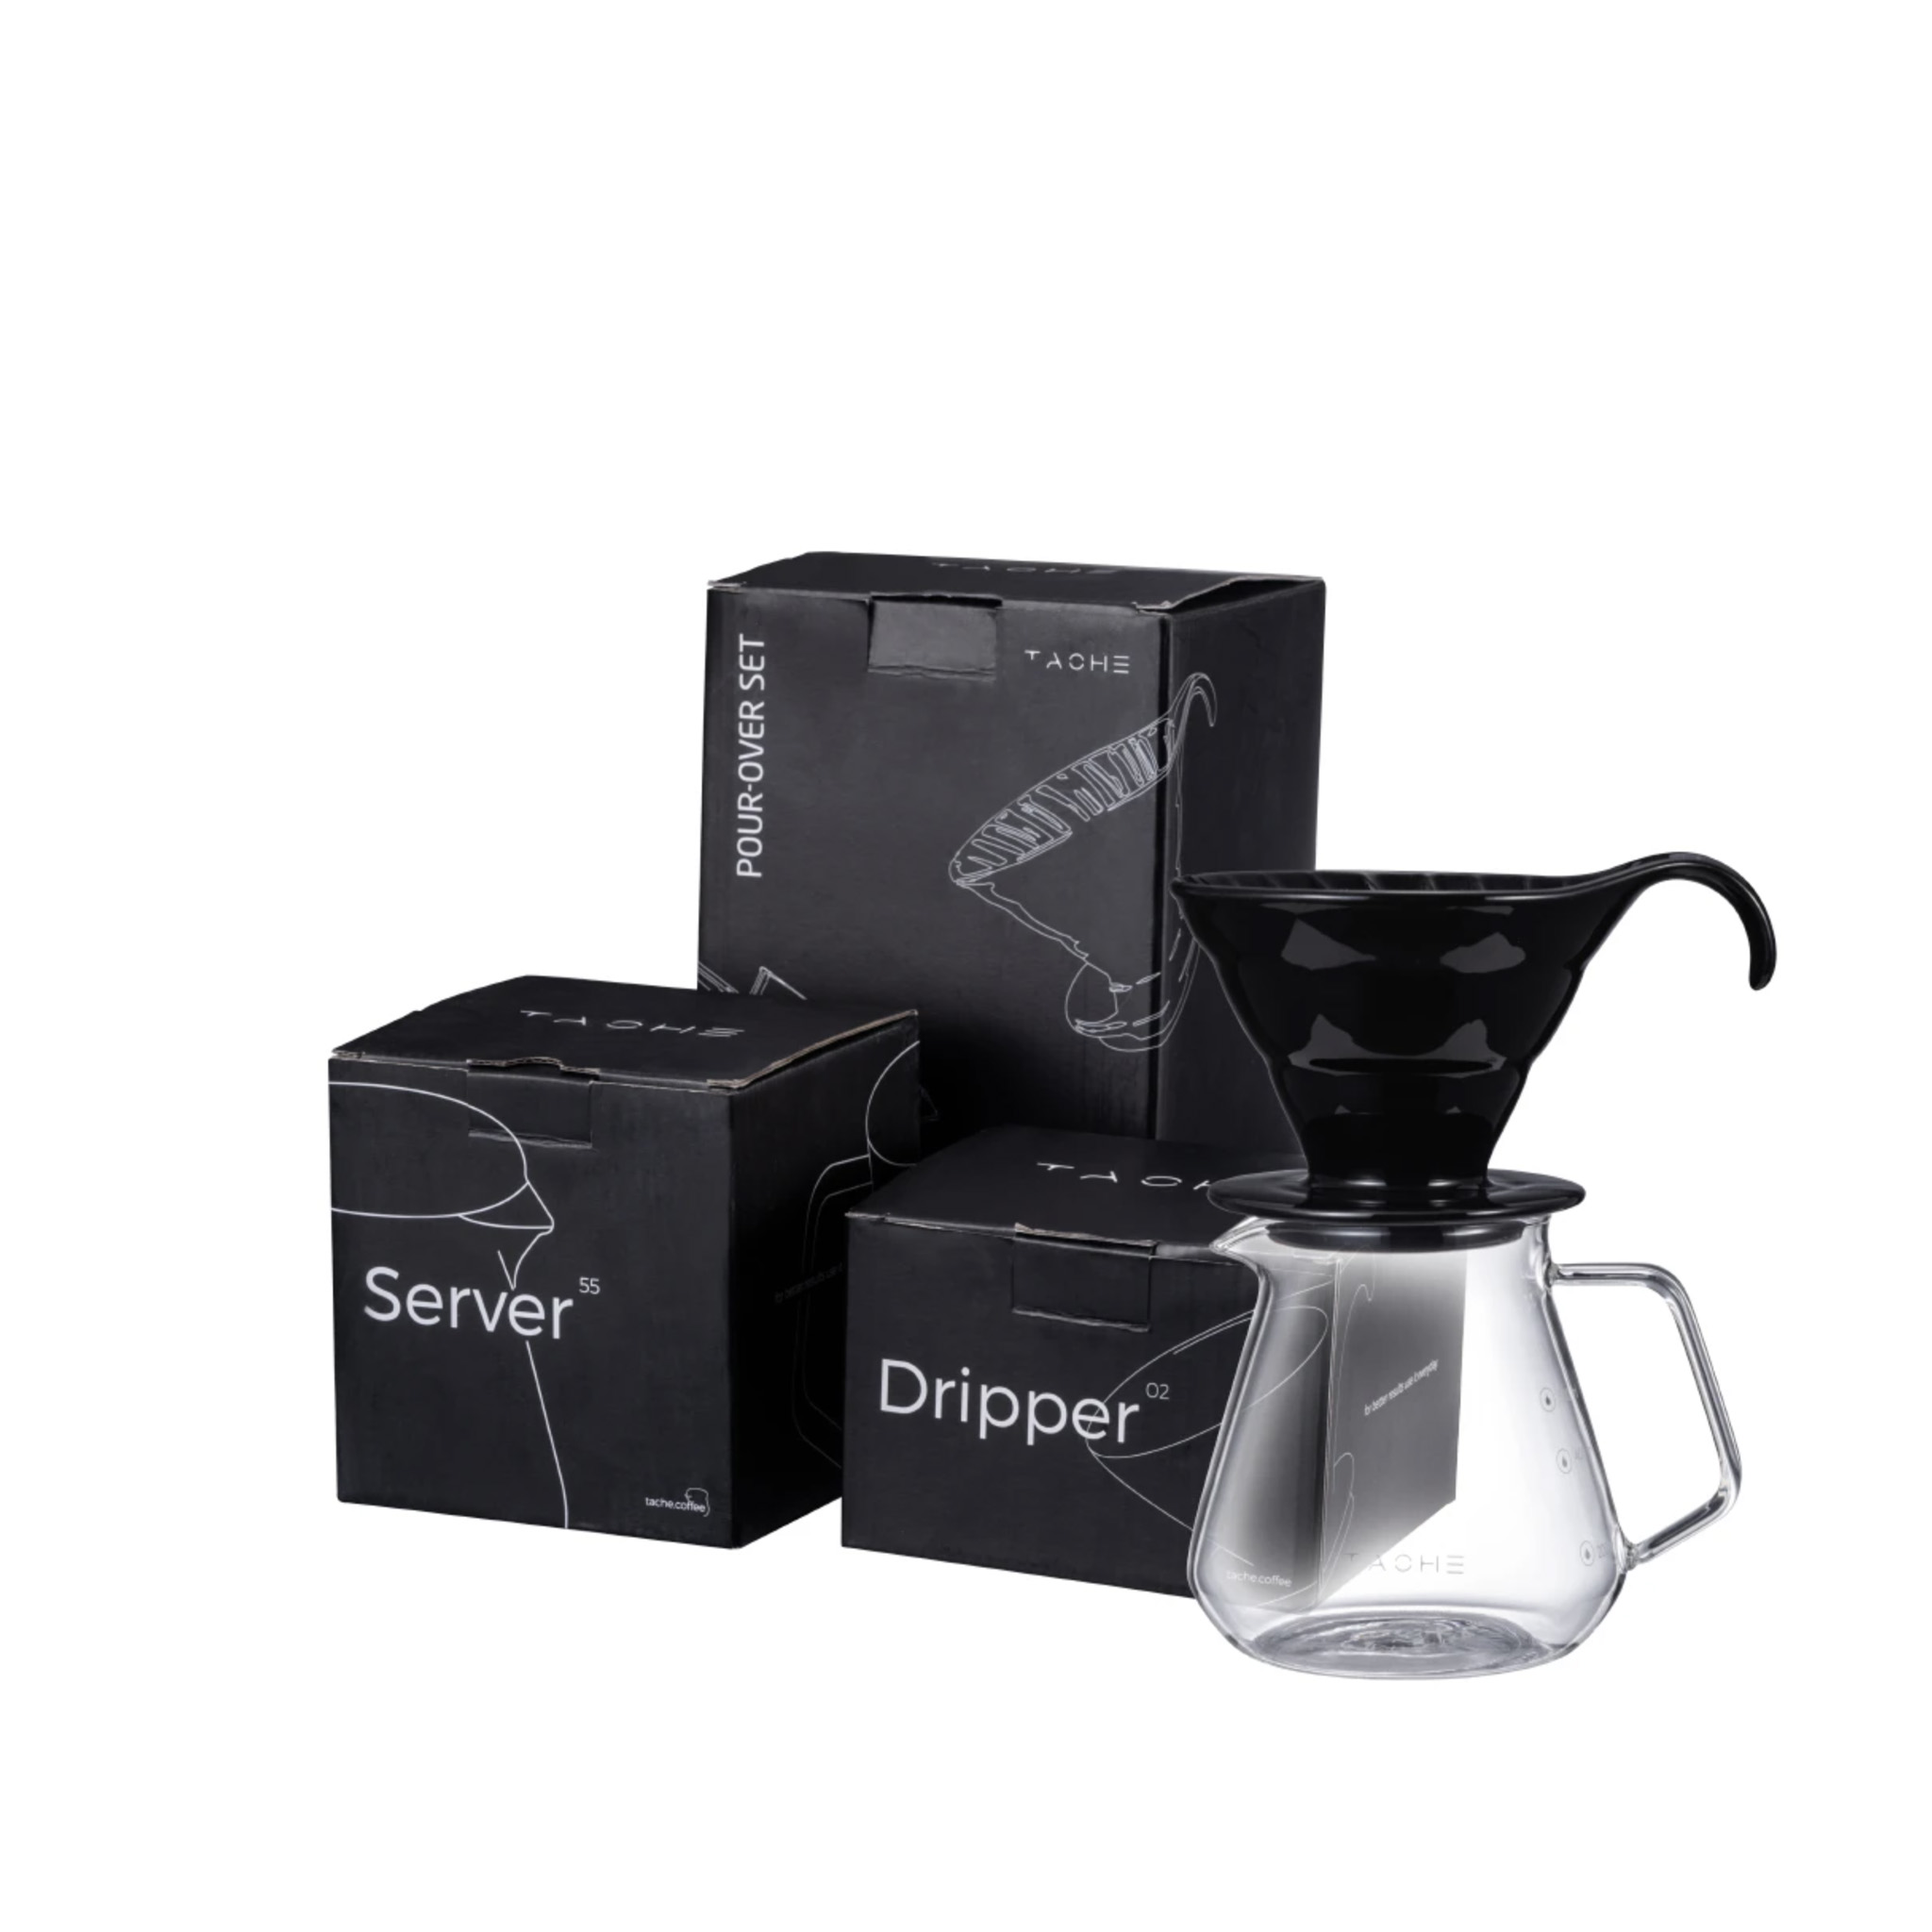 Ceramic Coffee Dripper Set | طقم التقطير السيراميكي (Tache)